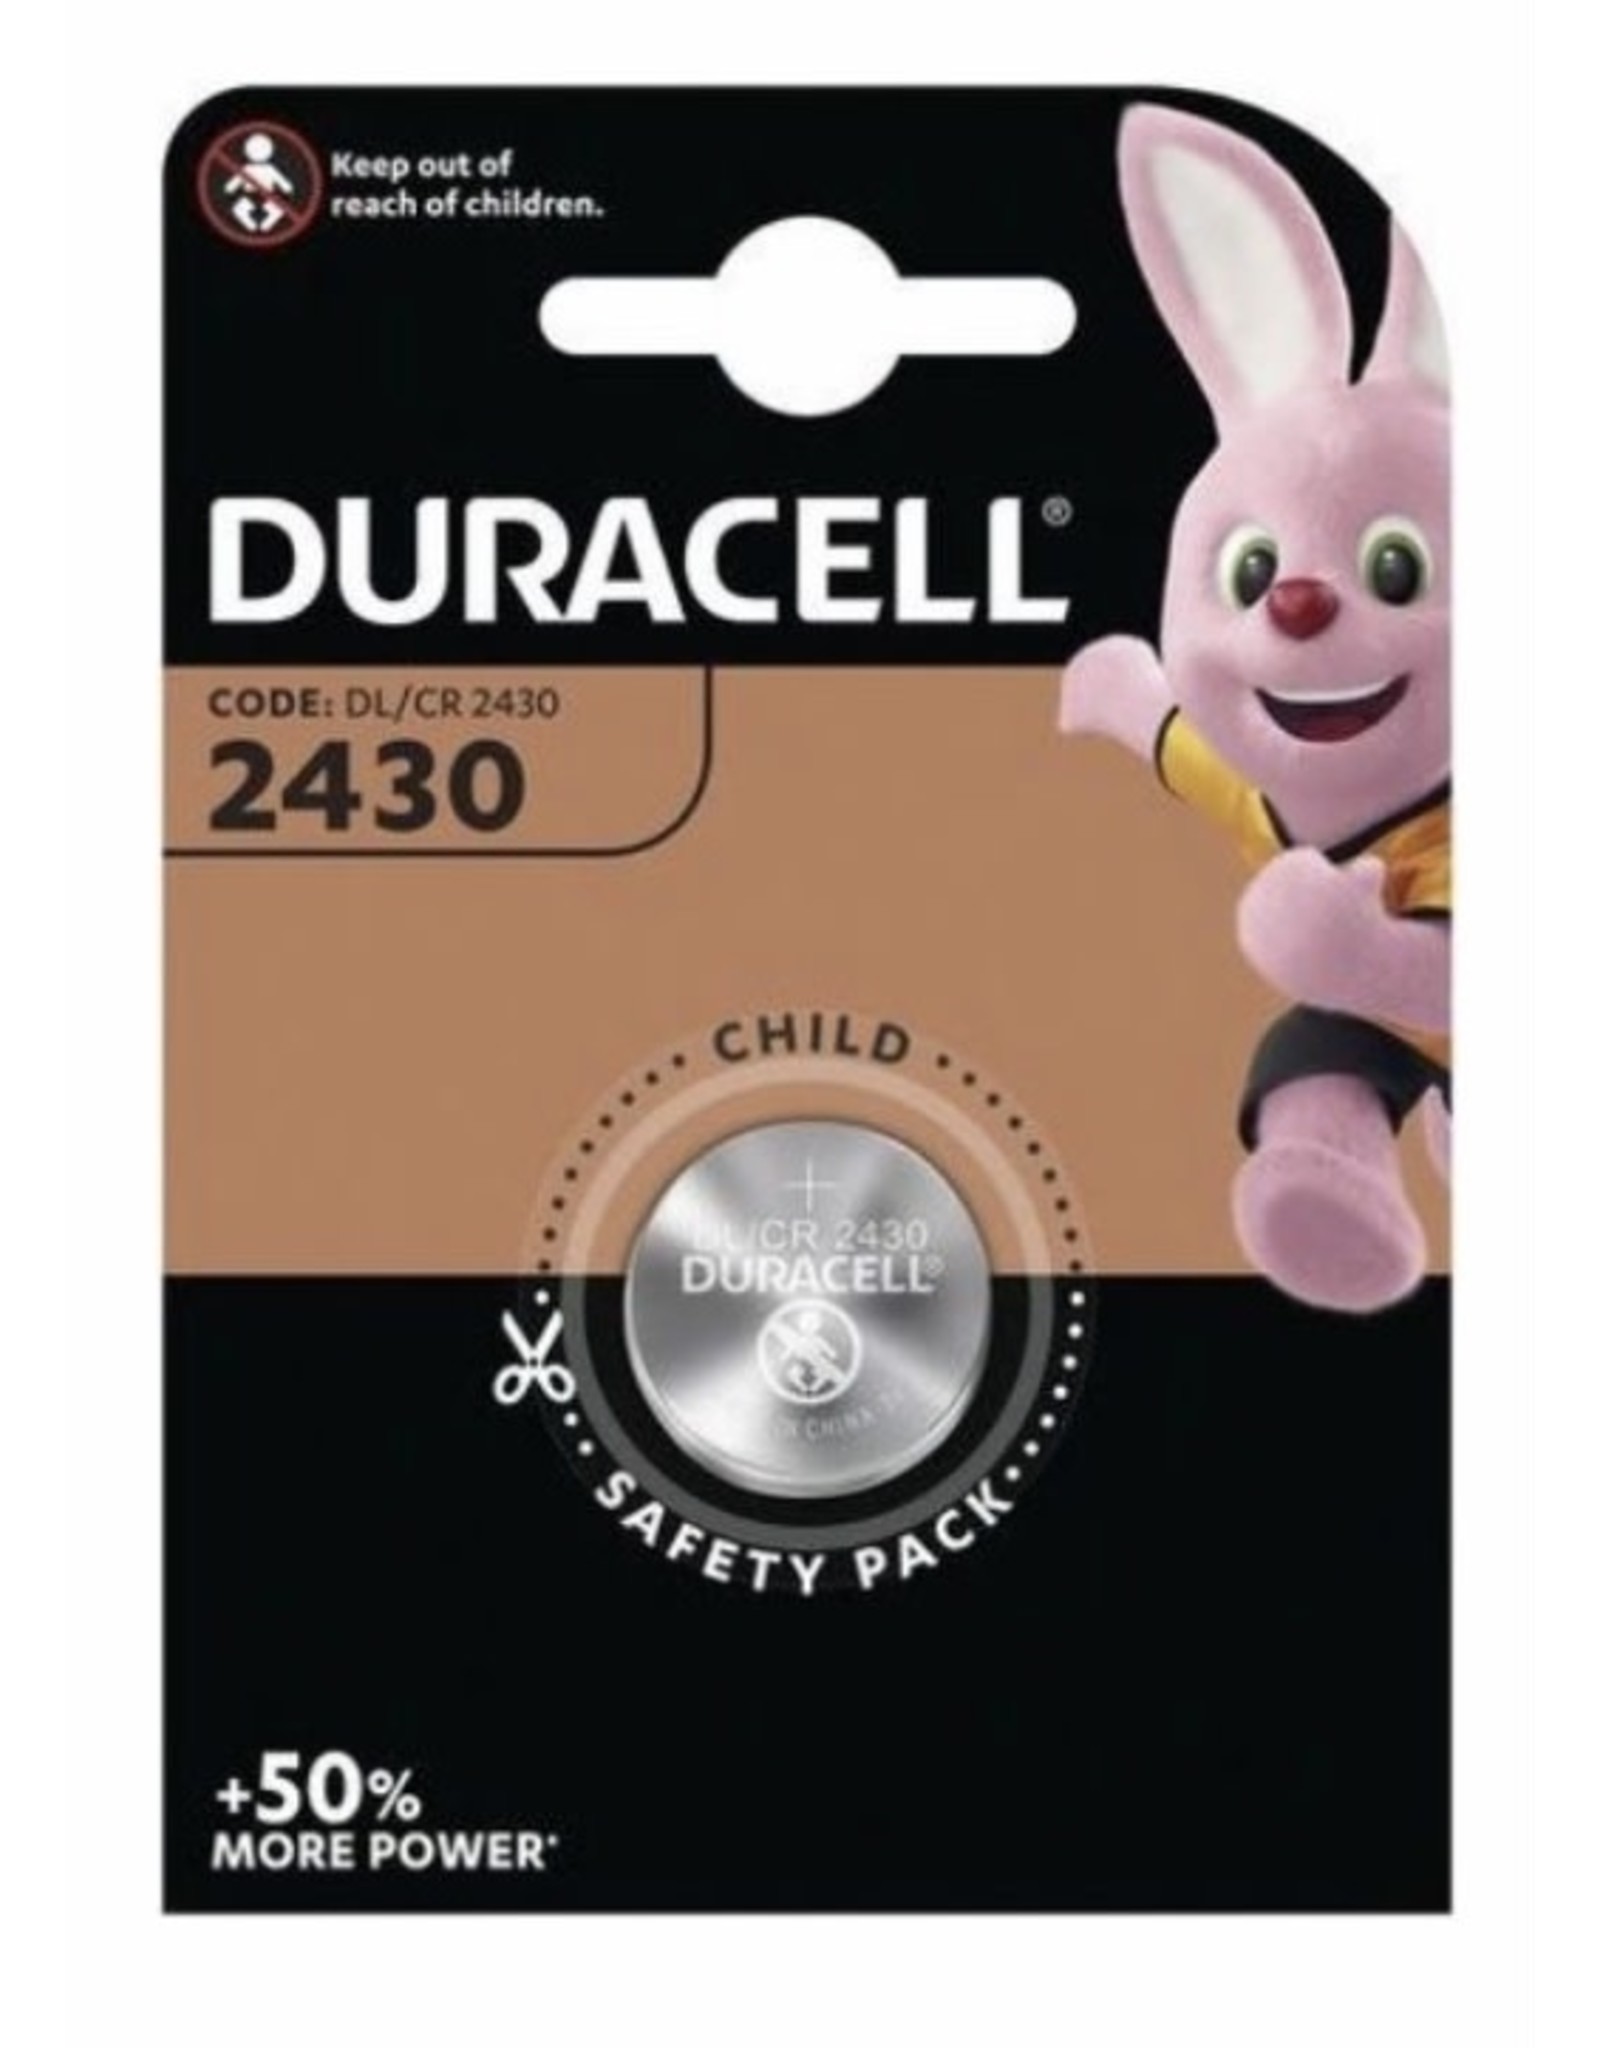 DURACELL Batterij Duracell knoopcel 1xCR2430 lithium Ø24mm 3V-280mAh